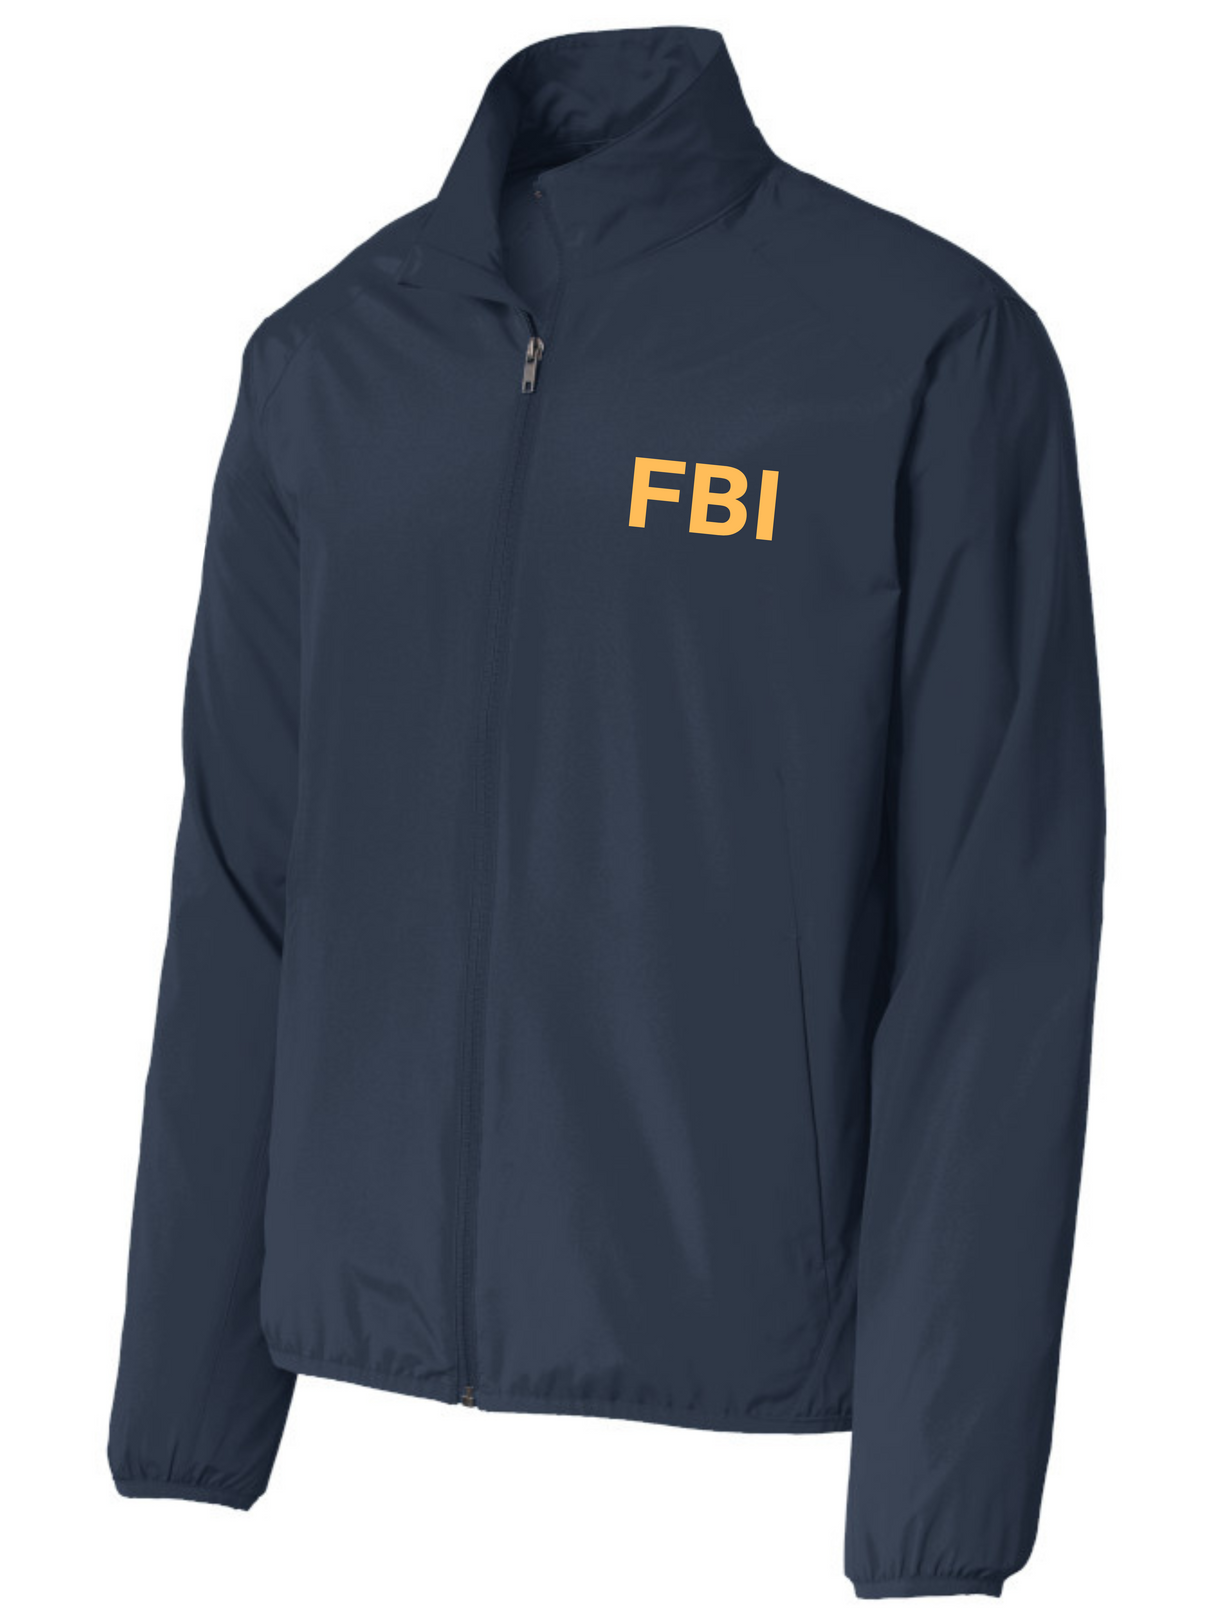 FBI Lab - Agency Identifier Jacket - FEDS Apparel